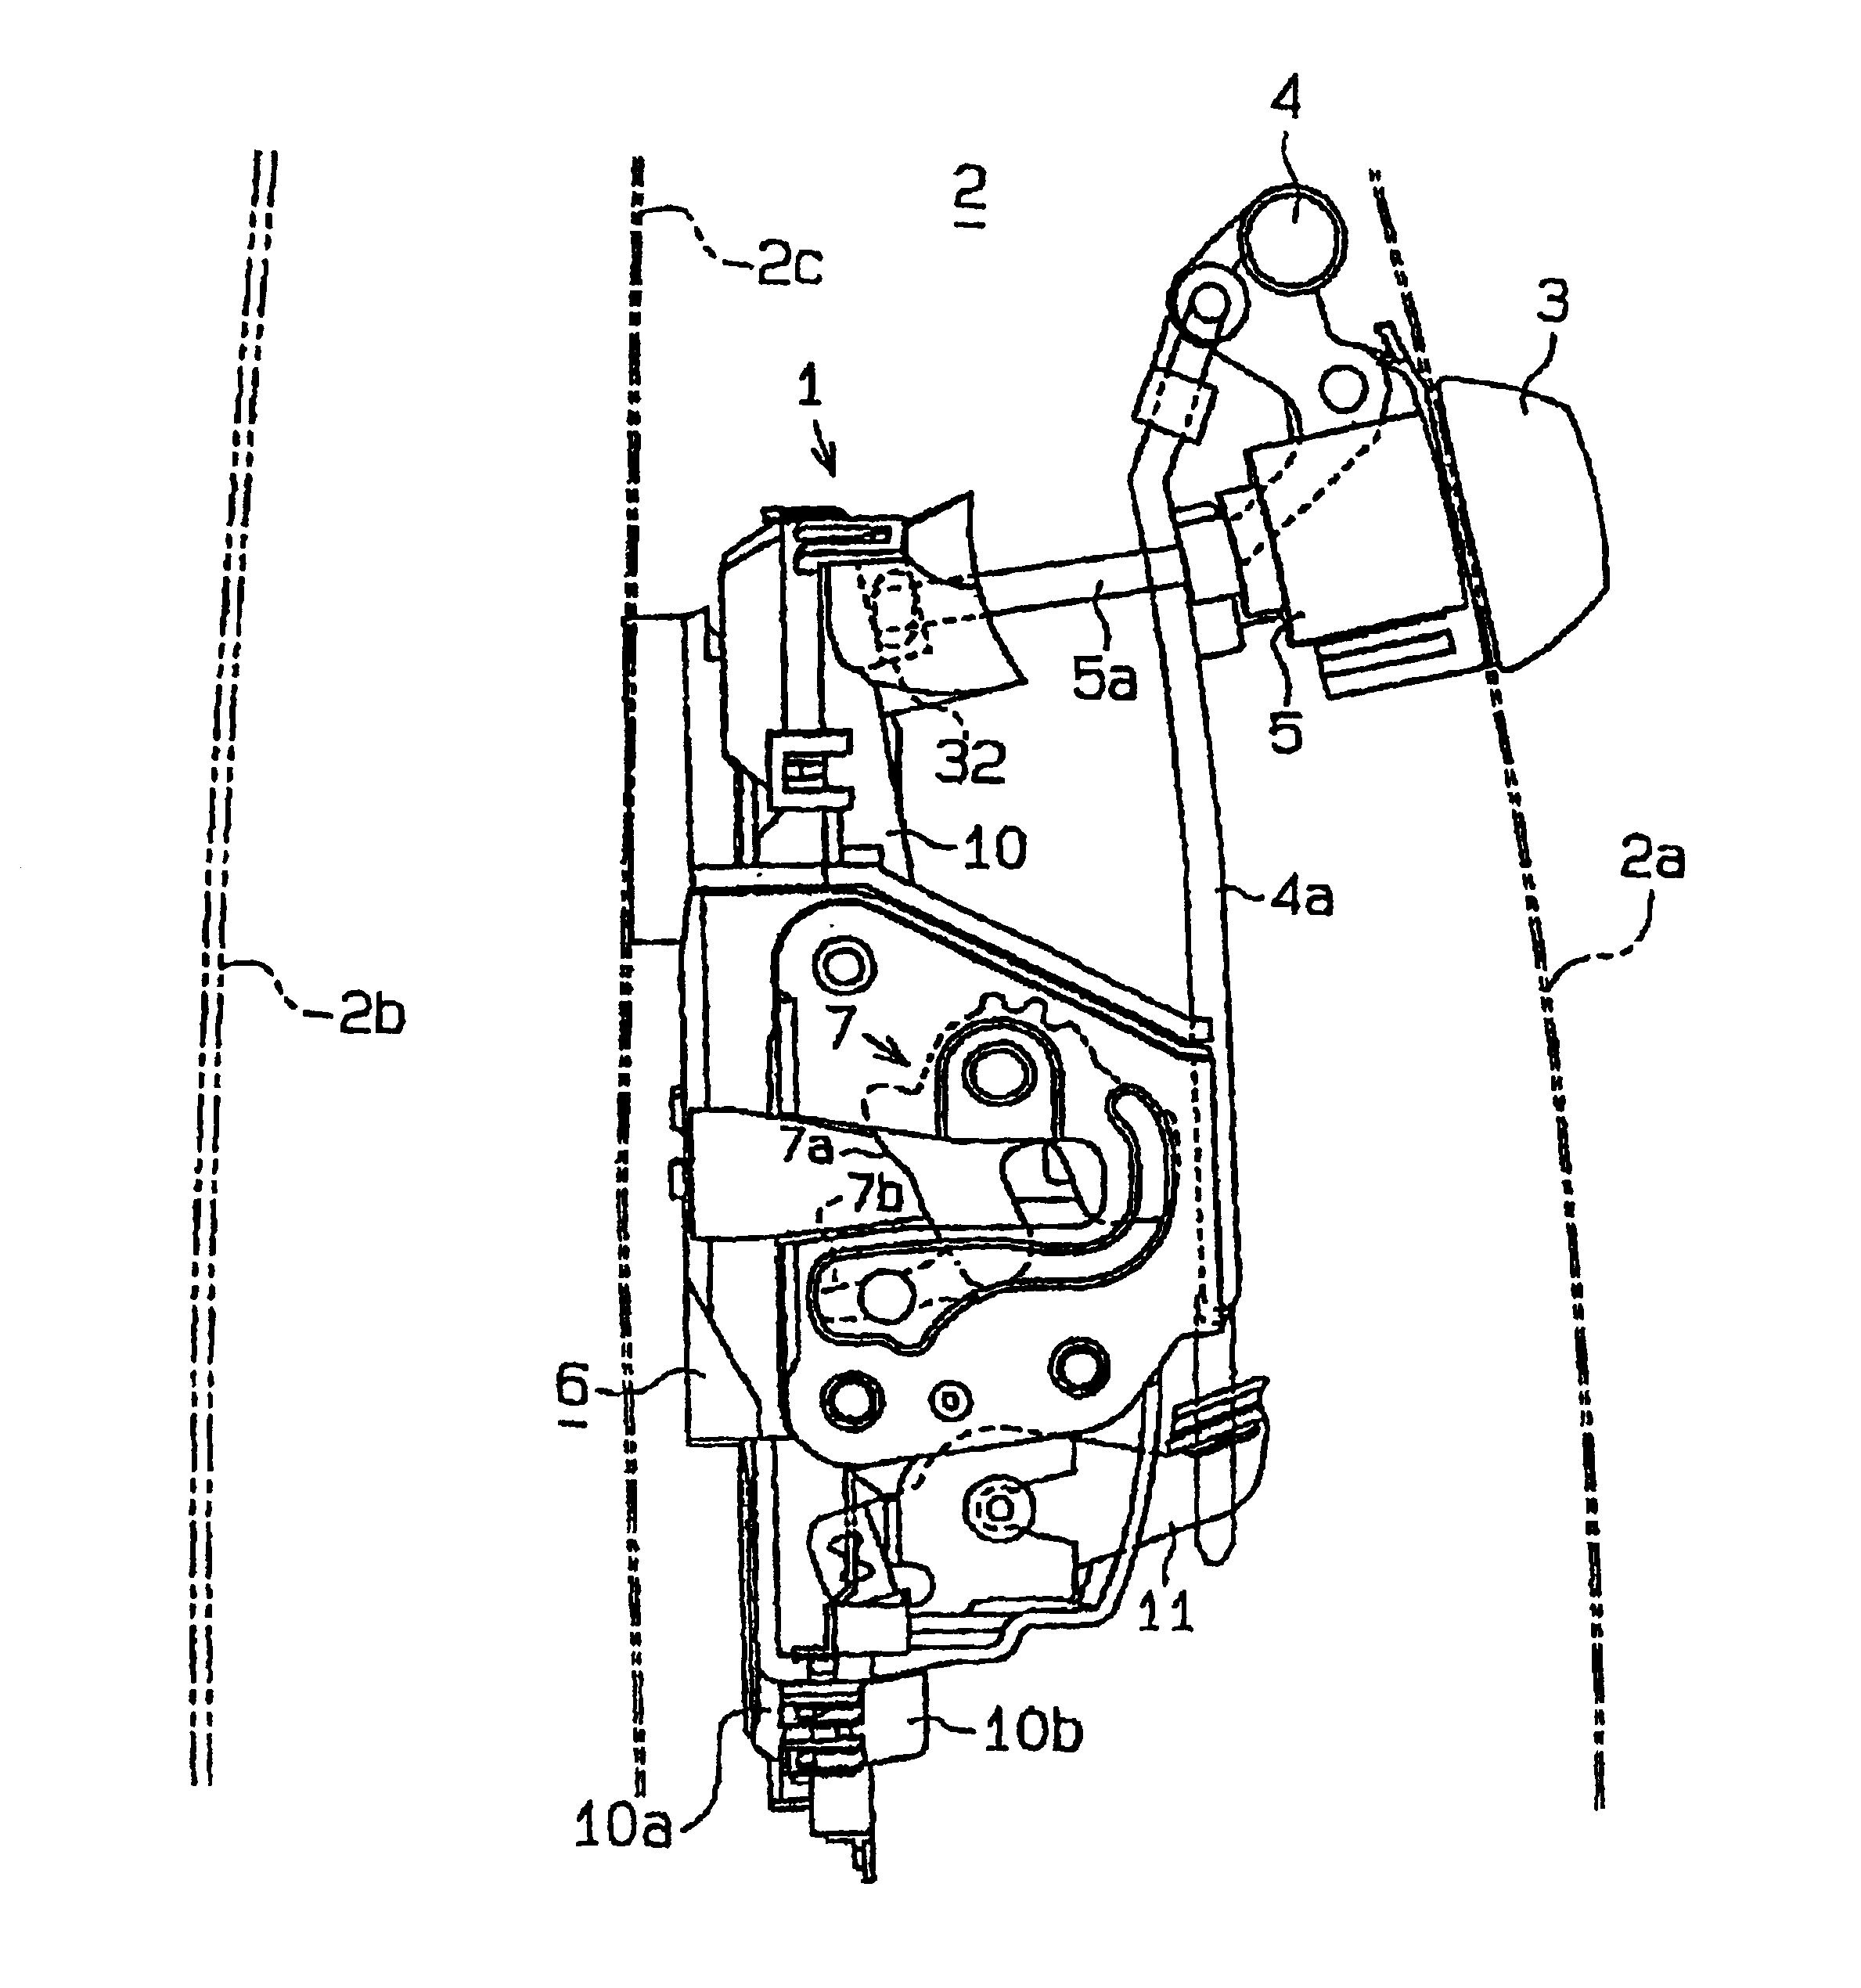 Vehicle door lock apparatus